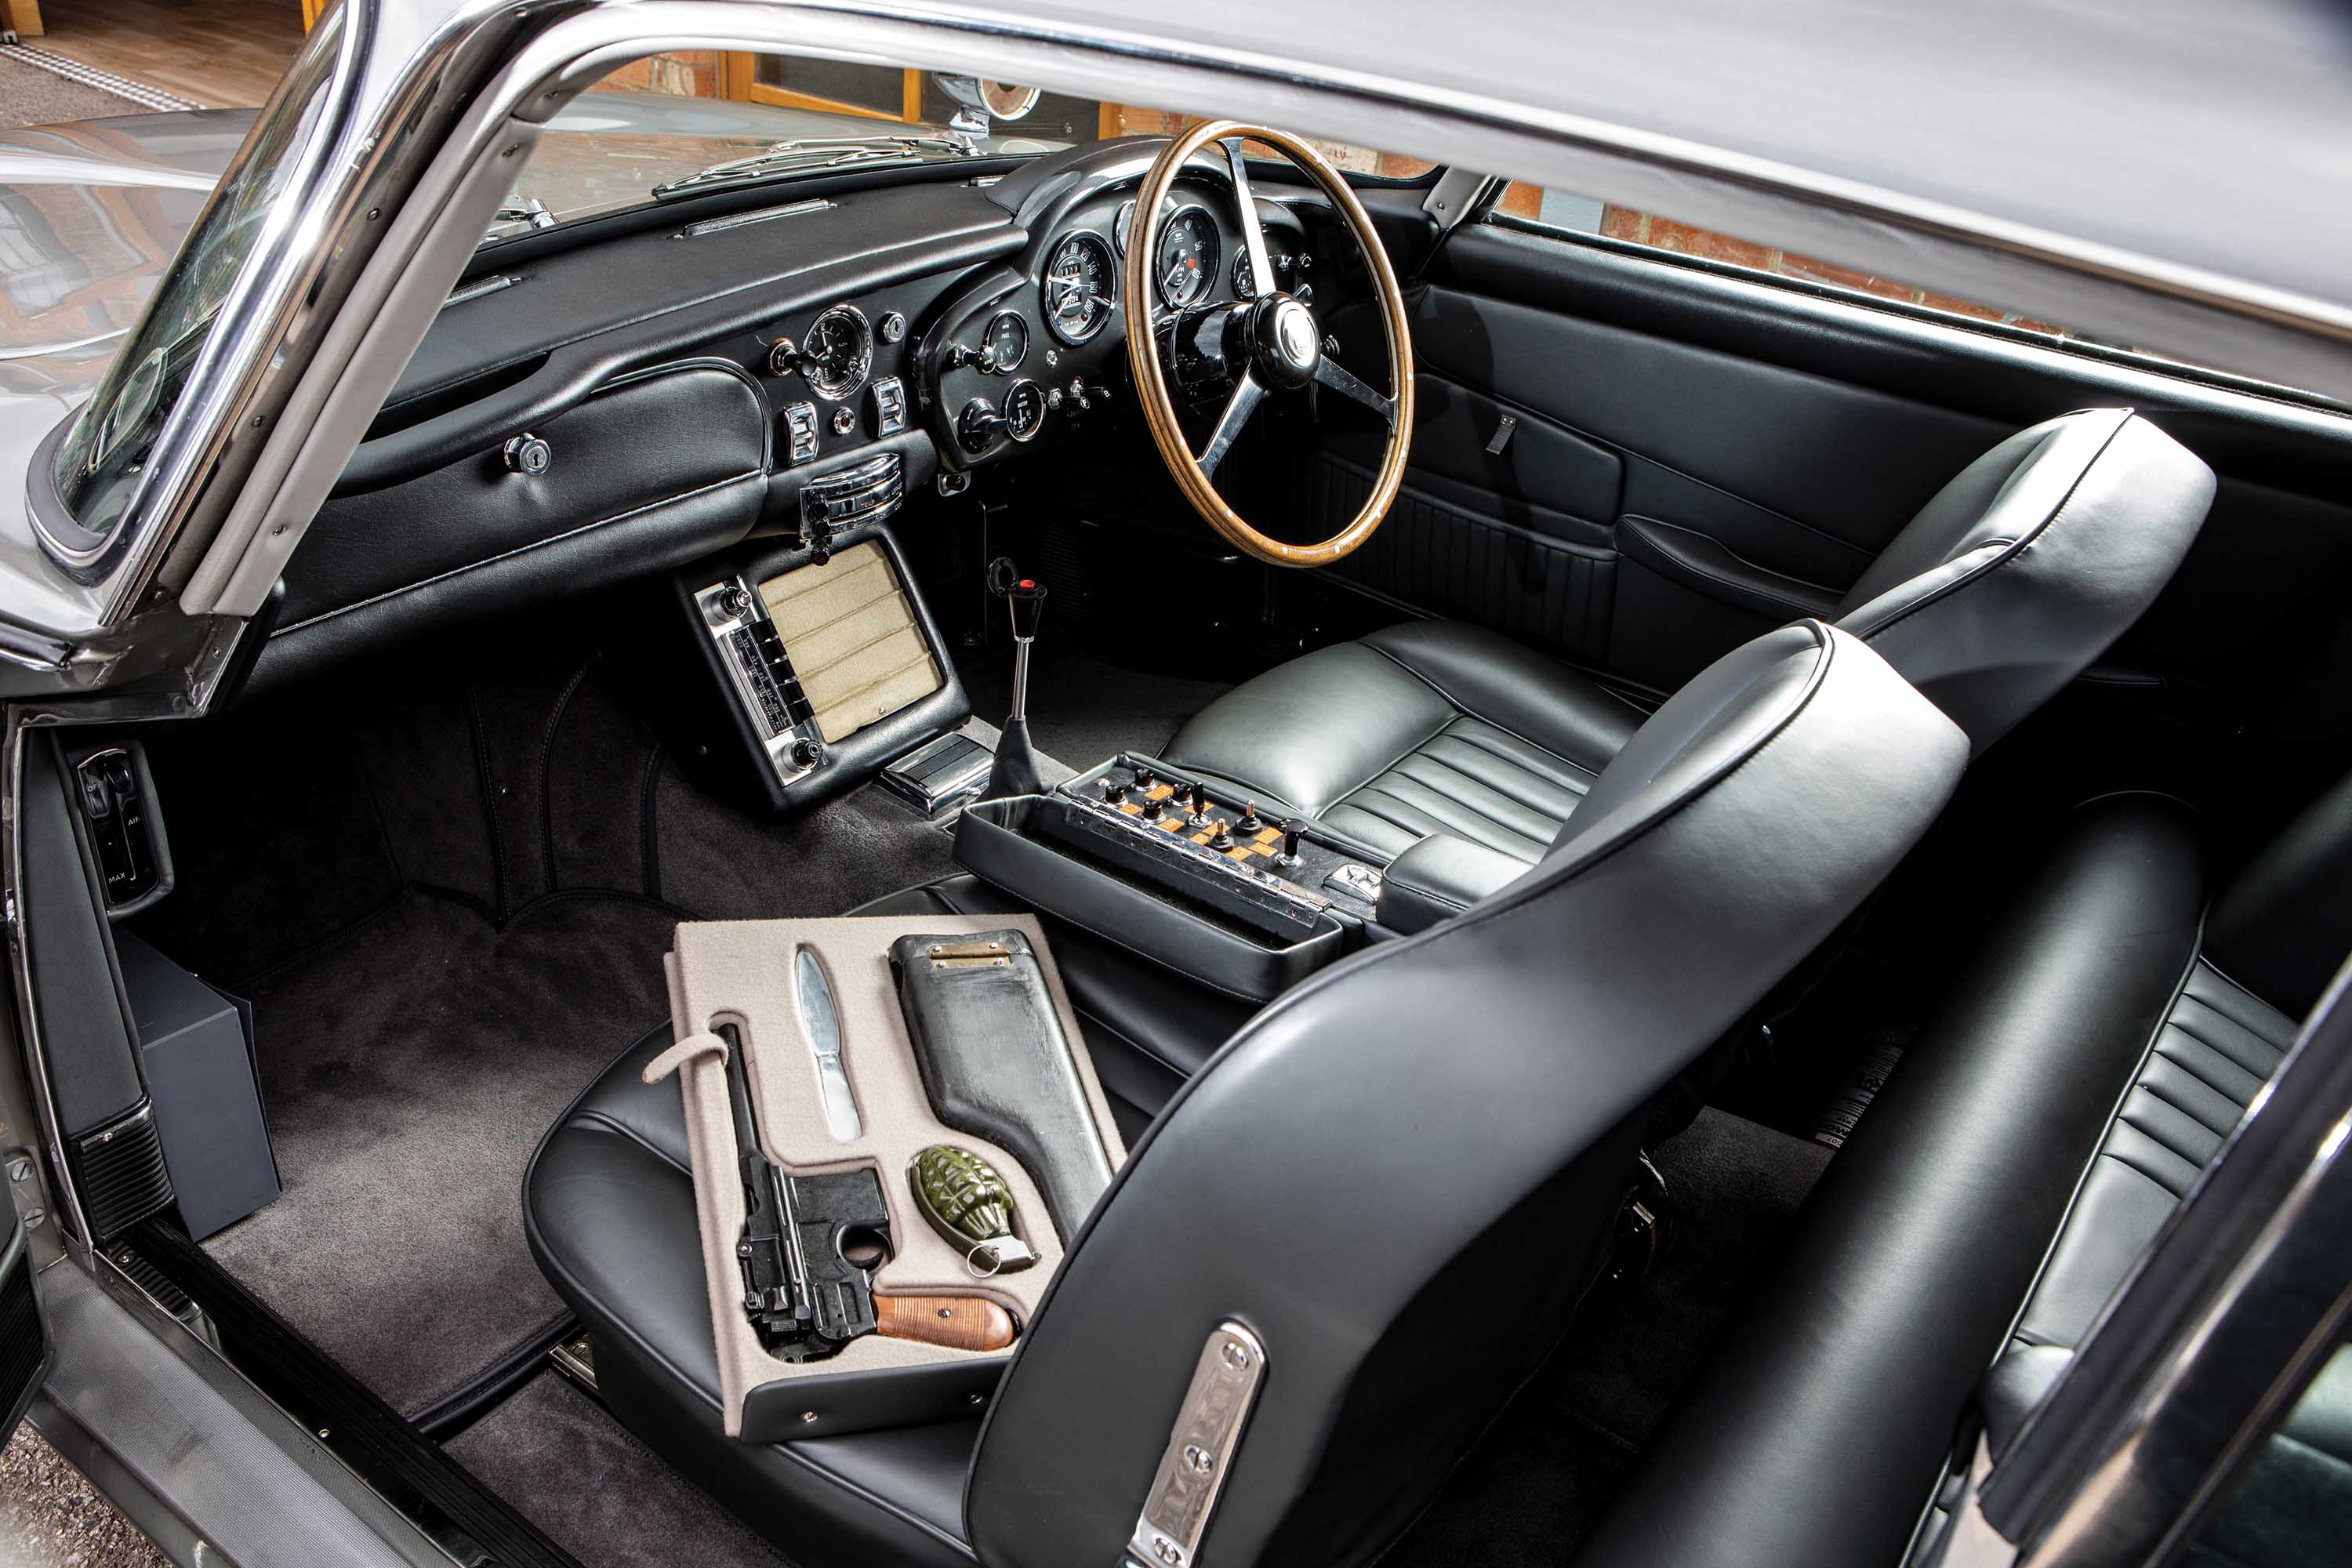 Aston Martin DB5: James Bond car sells for $6.4M - CNN Style